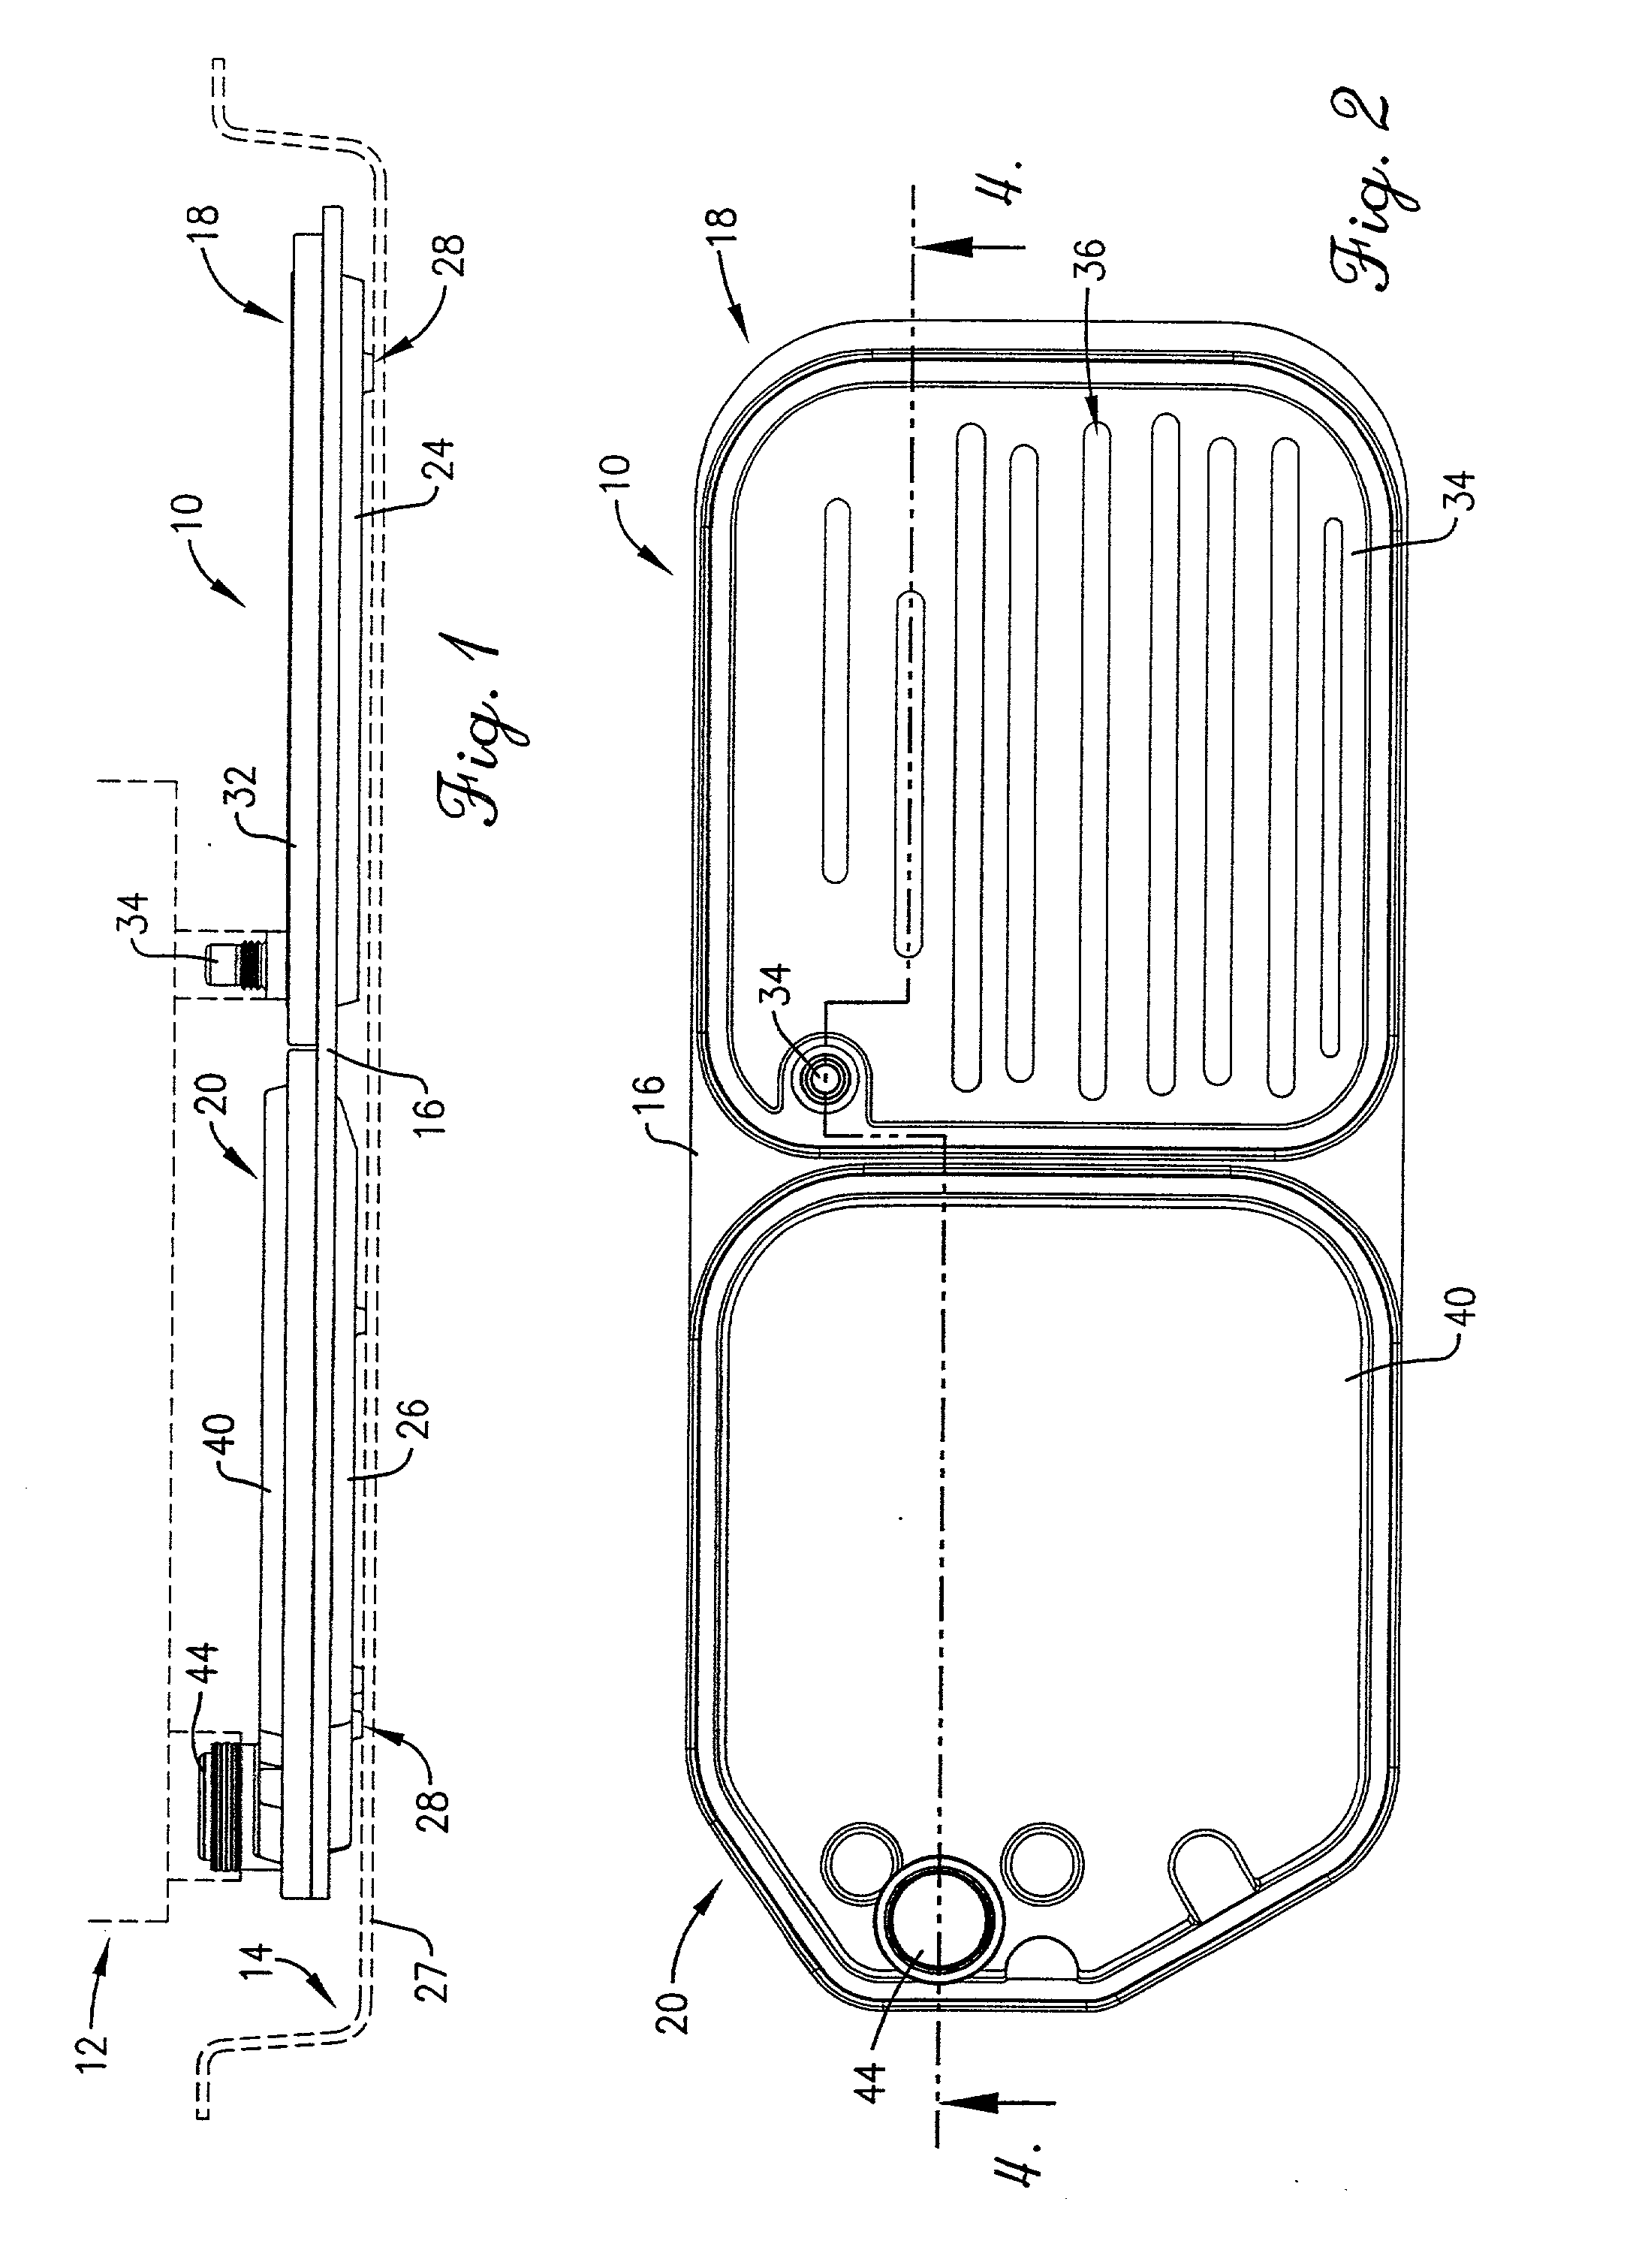 Return-side filter for use in a vehicle transmission